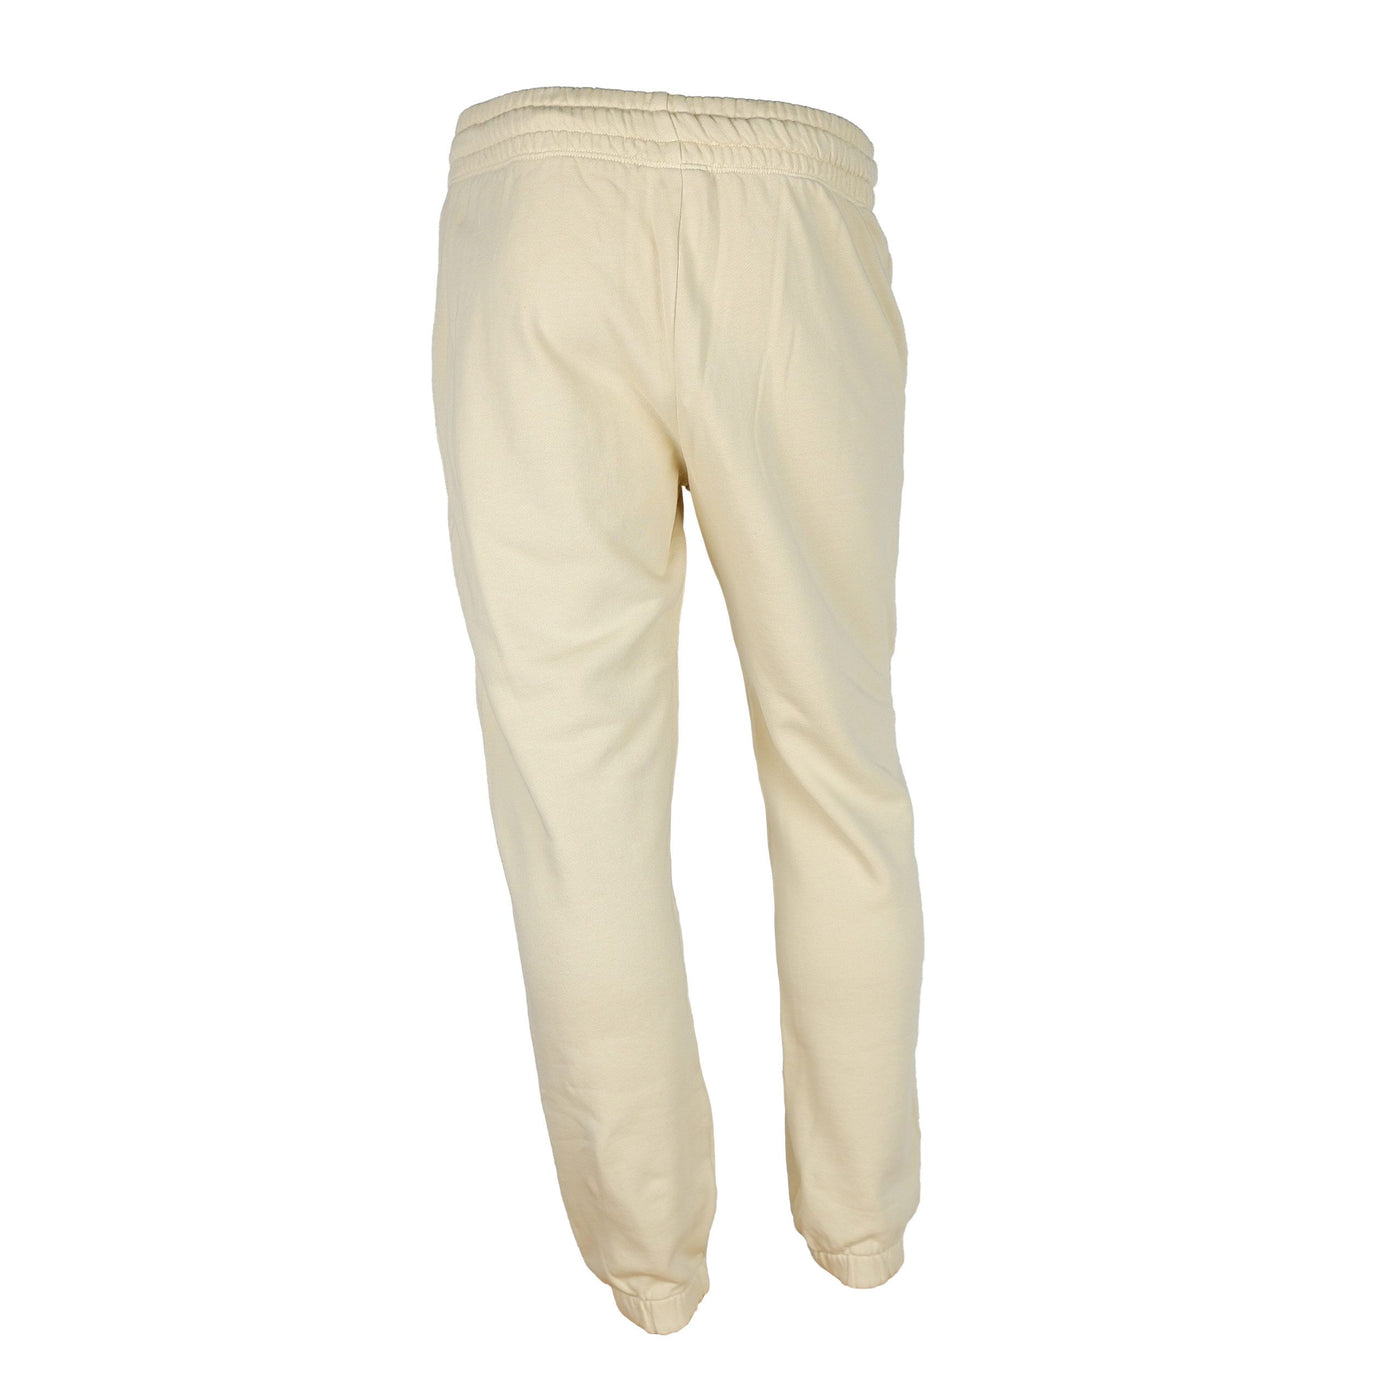 Diego Venturino Elegant Beige Cotton Tracksuit Trousers for Men